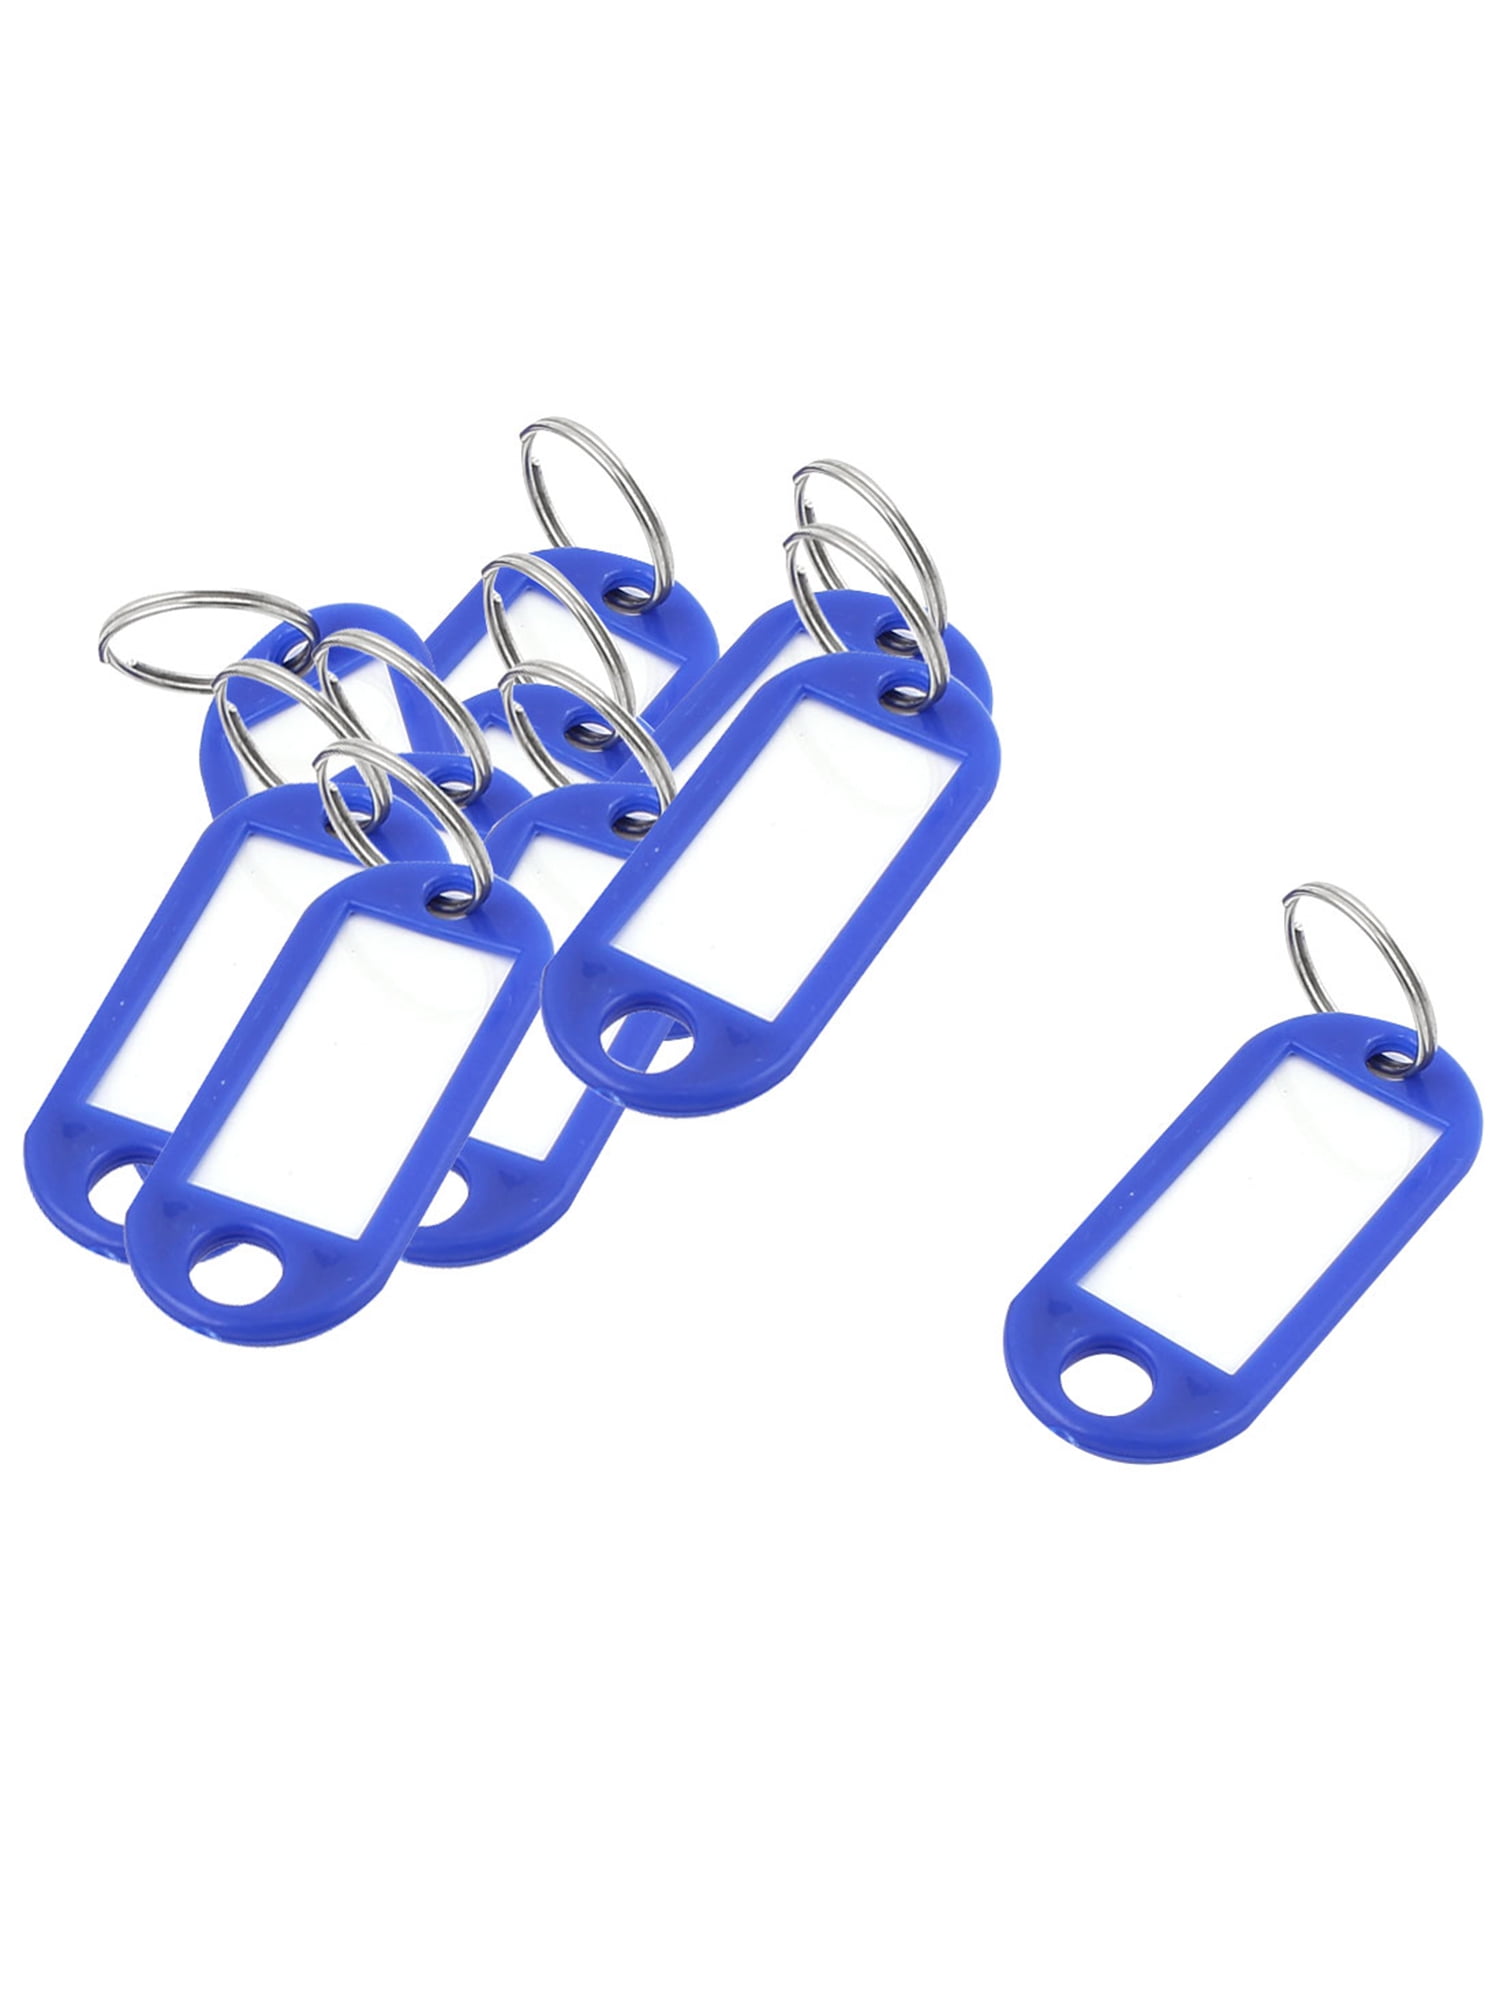 100pcs Plastic Key Tags Metal Ring Luggage Card Name Label Keychain W/Split Ring 